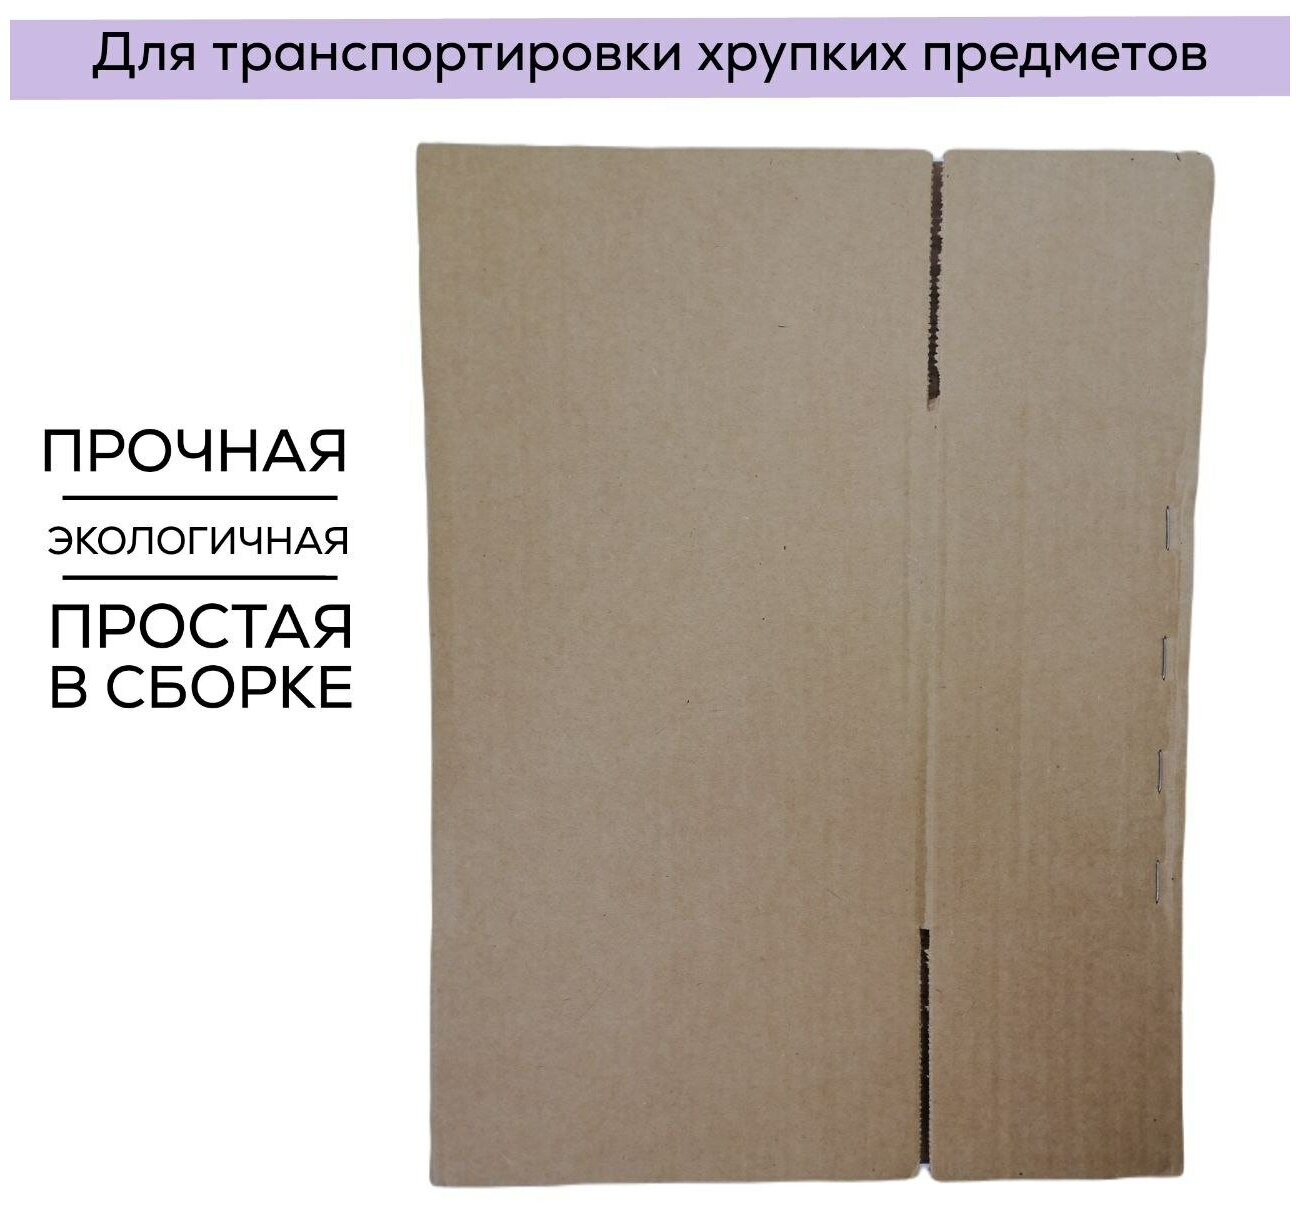 Картонная коробка для переезда и хранения вещей, складной гофрокороб , набор коробок 10 шт,17х17х9